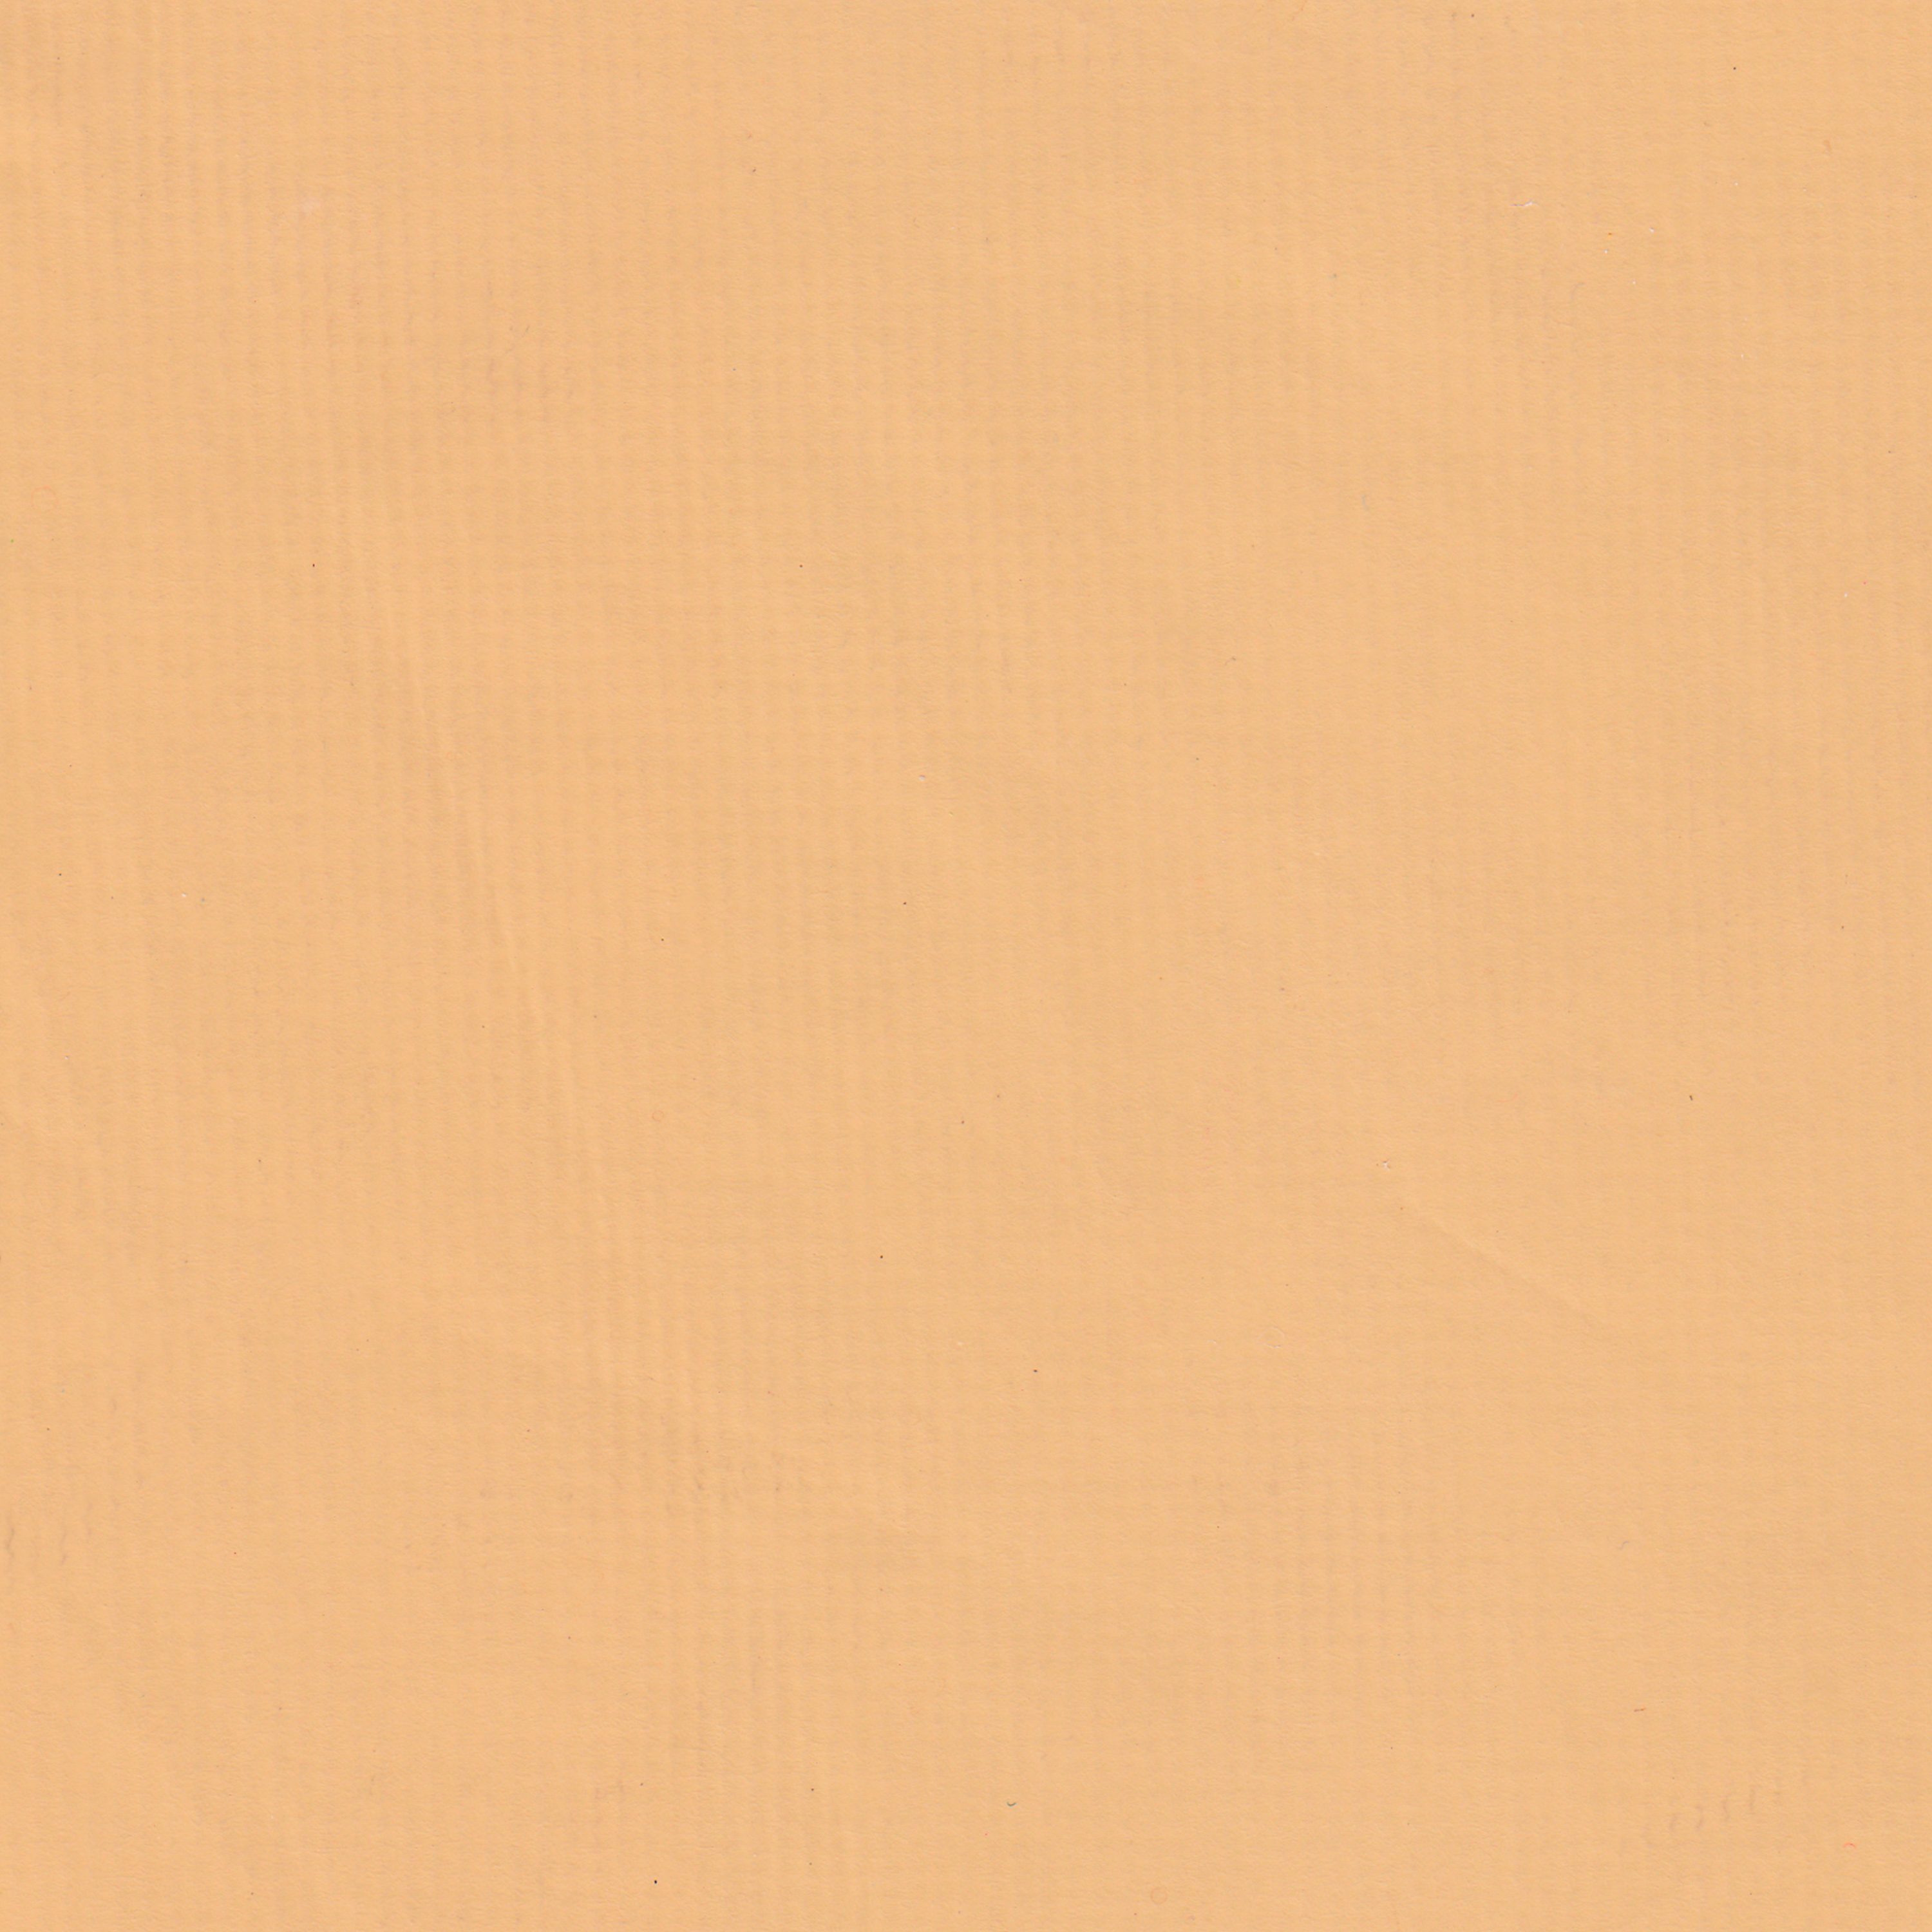 Wickelauflage 'Dahlia' AK hinten 80 x 70 cm, sandfarben